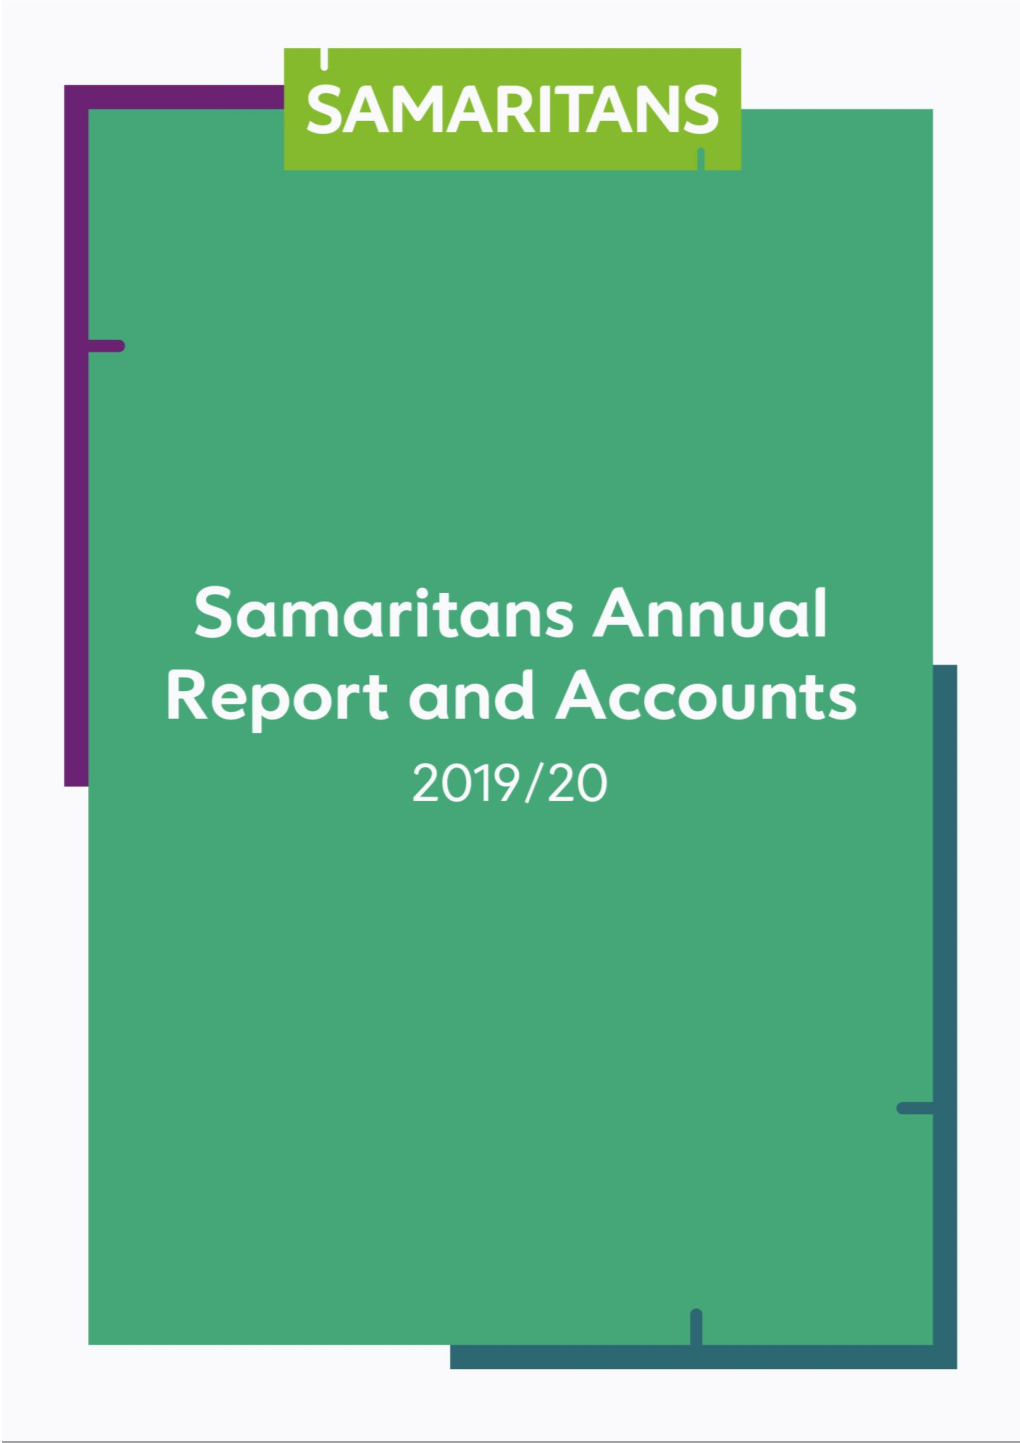 Annual Report & Accounts 2019/20 1